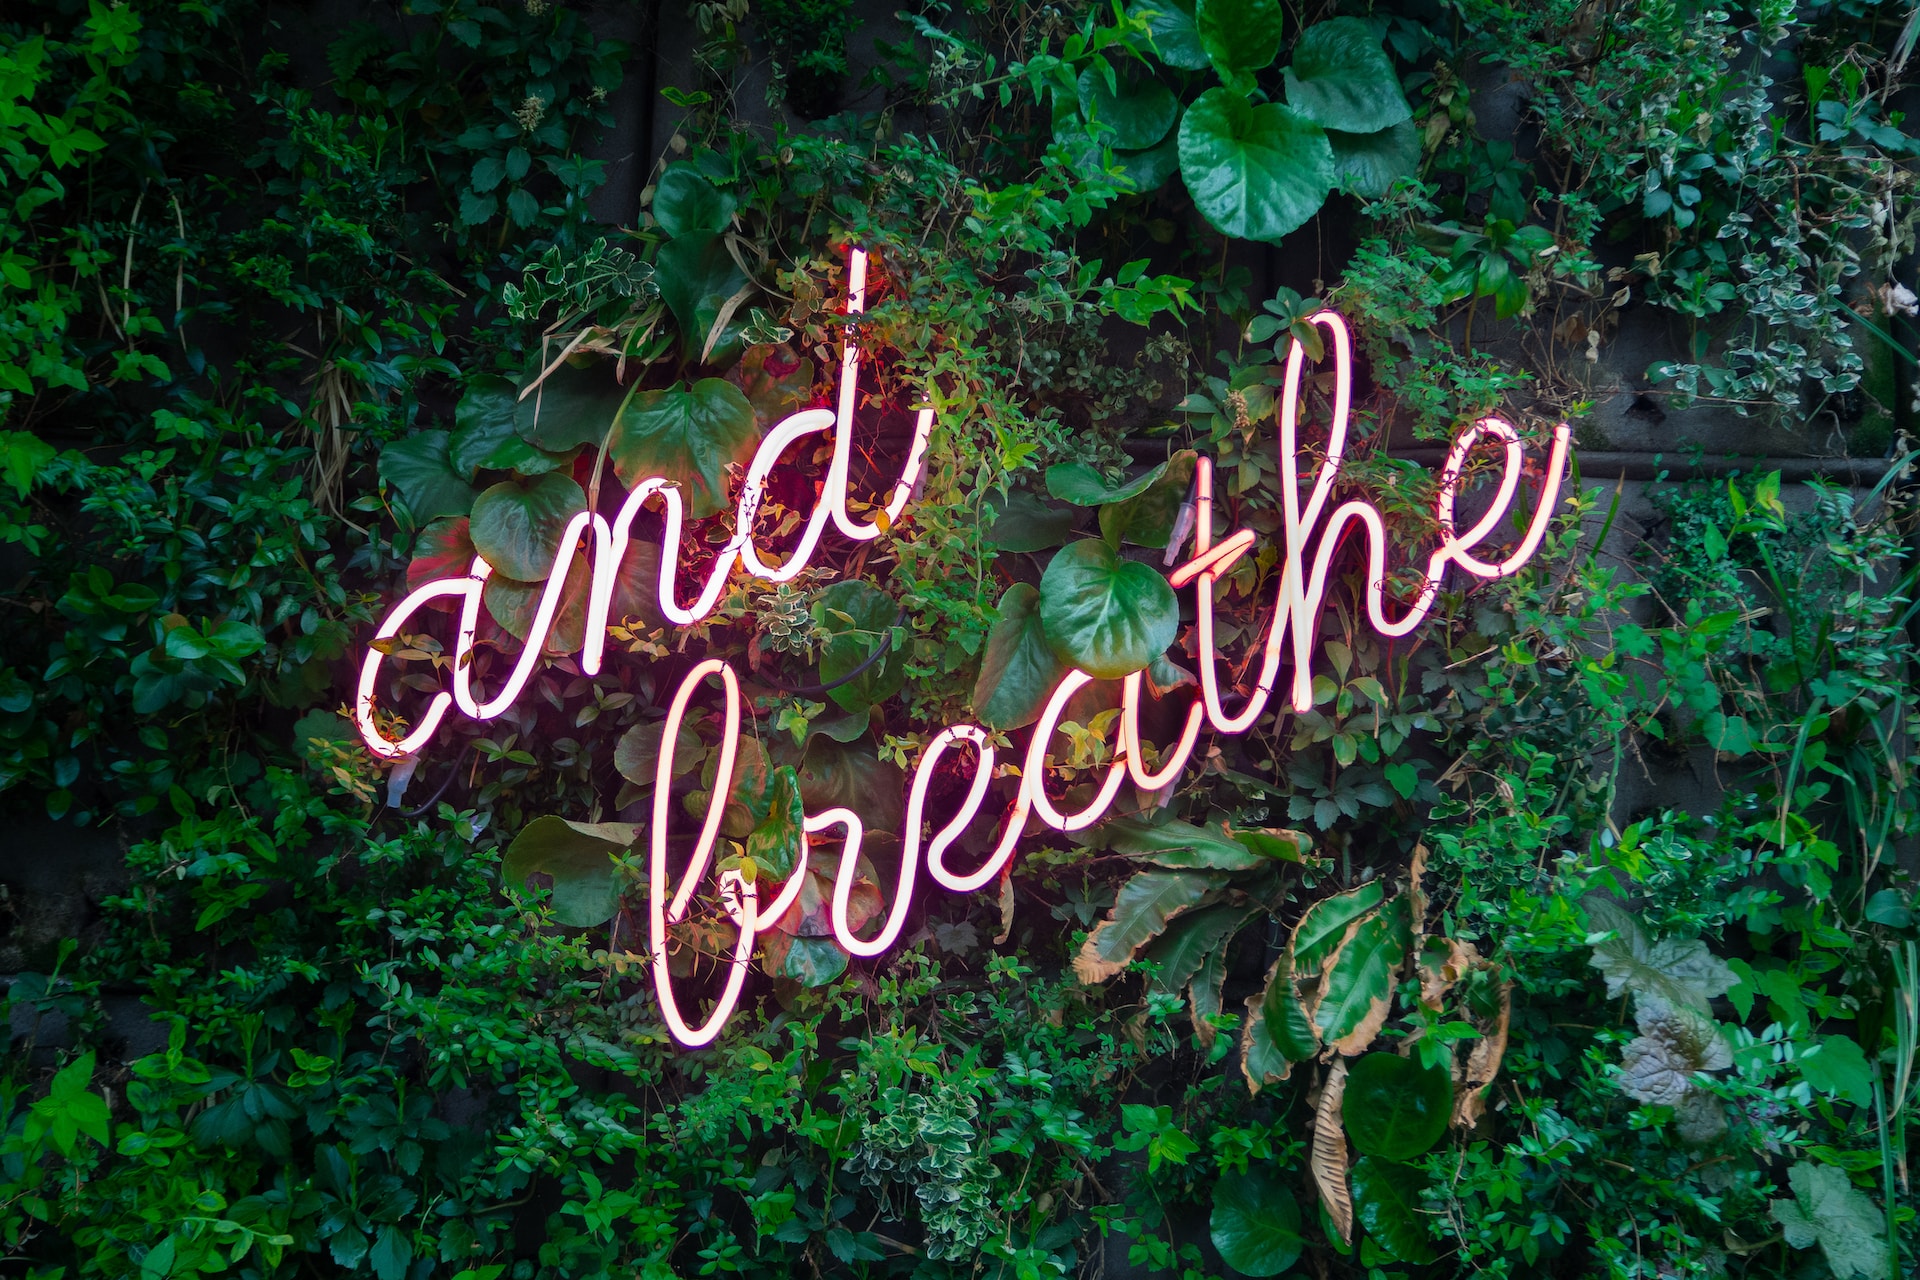 "and breathe" neon sign - Photo by Max van den Oetelaar on Unsplash